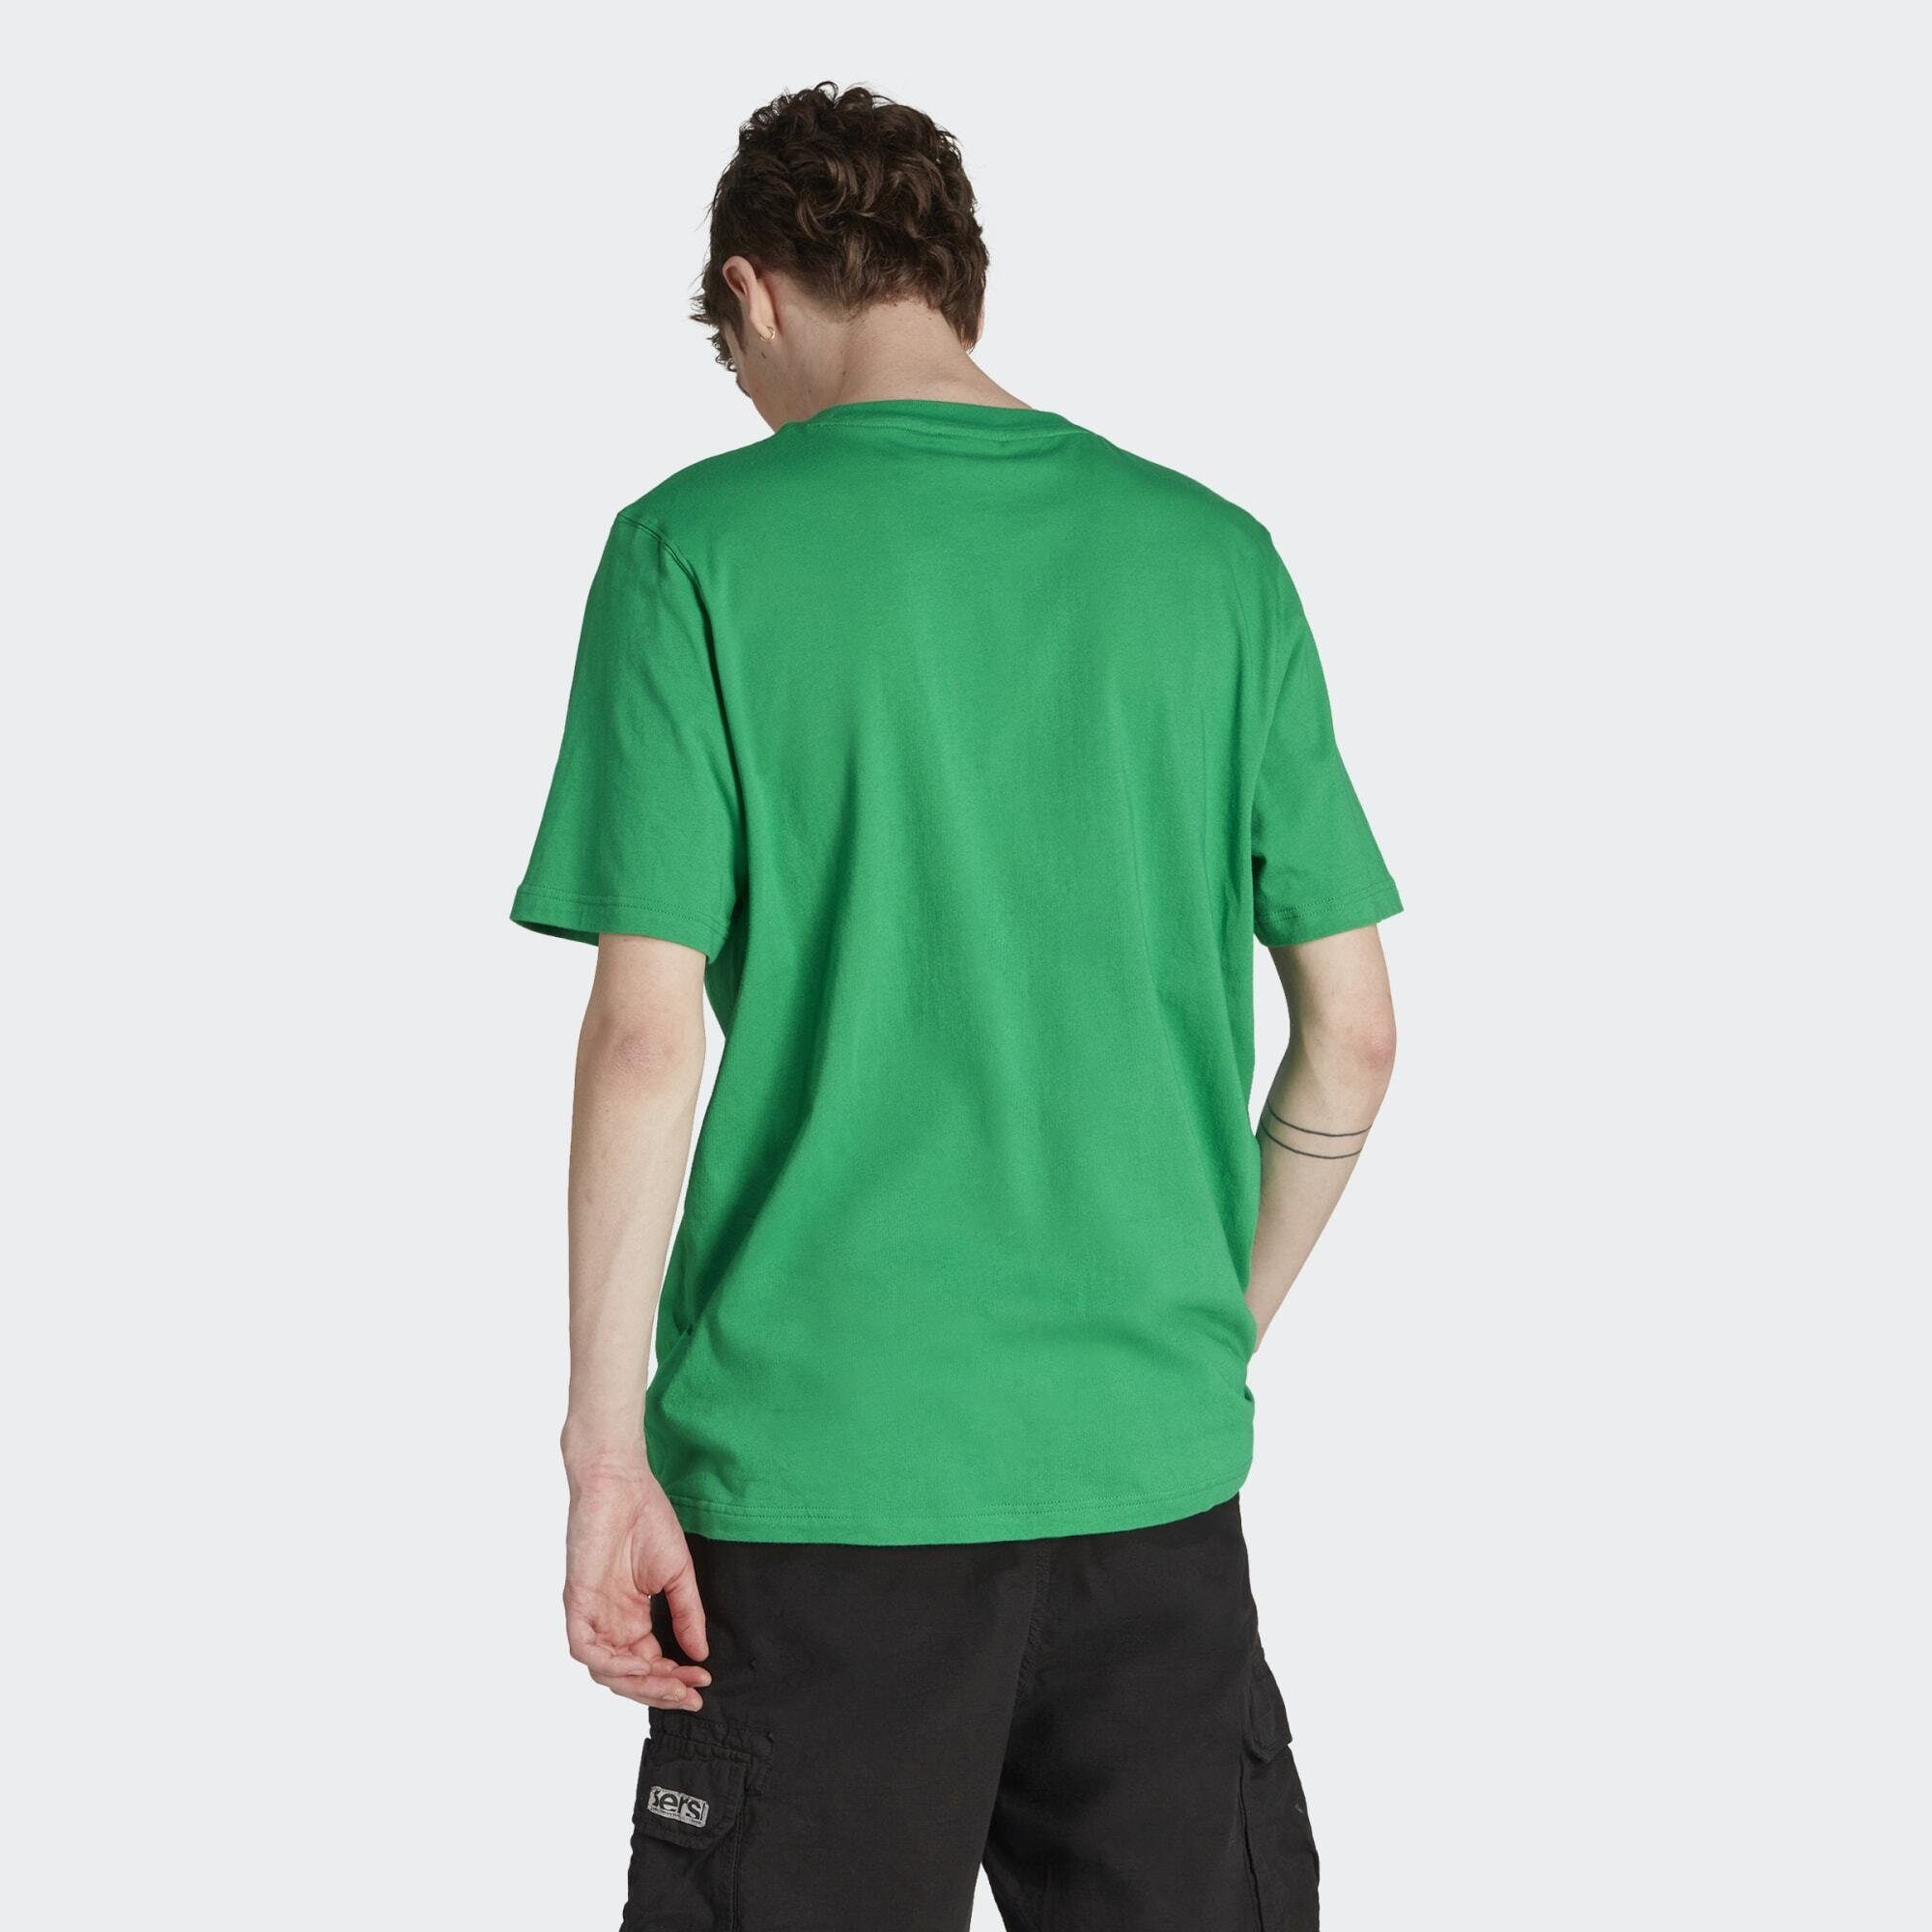 T-SHIRT T-Shirt Originals ESSENTIALS TREFOIL adidas Green